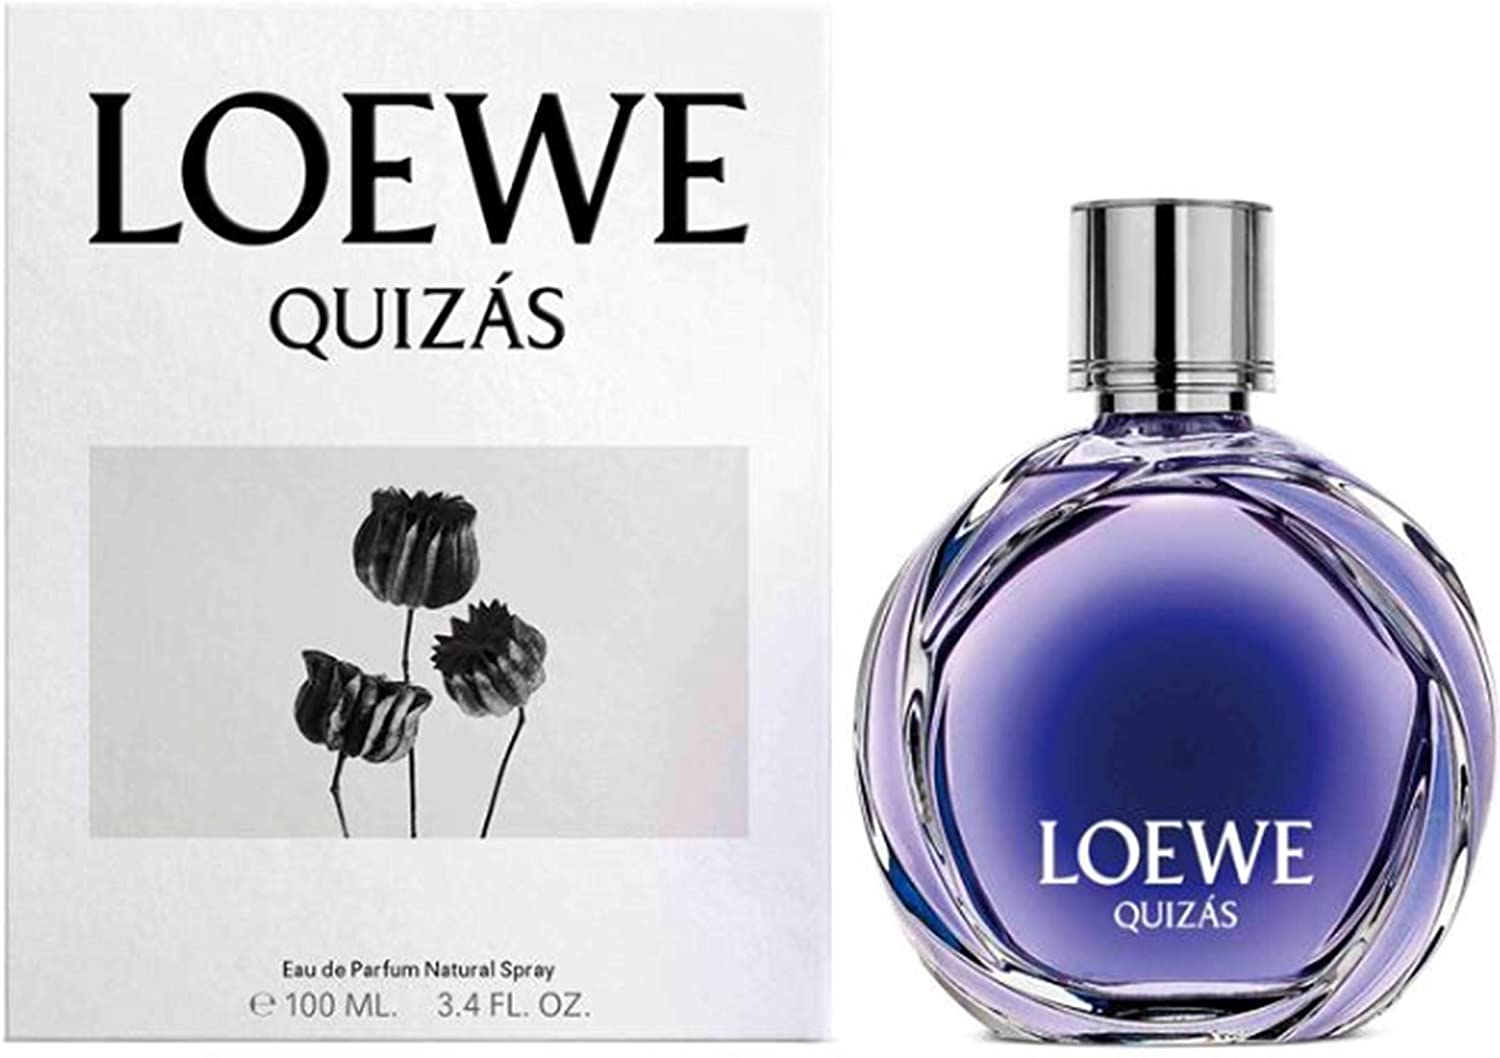 Loewe Quizas Loewe Eau de Parfum Spray for Women 100 ml at Ratans Online Shop - Perfumes Wholesale and Retailer Fragrance